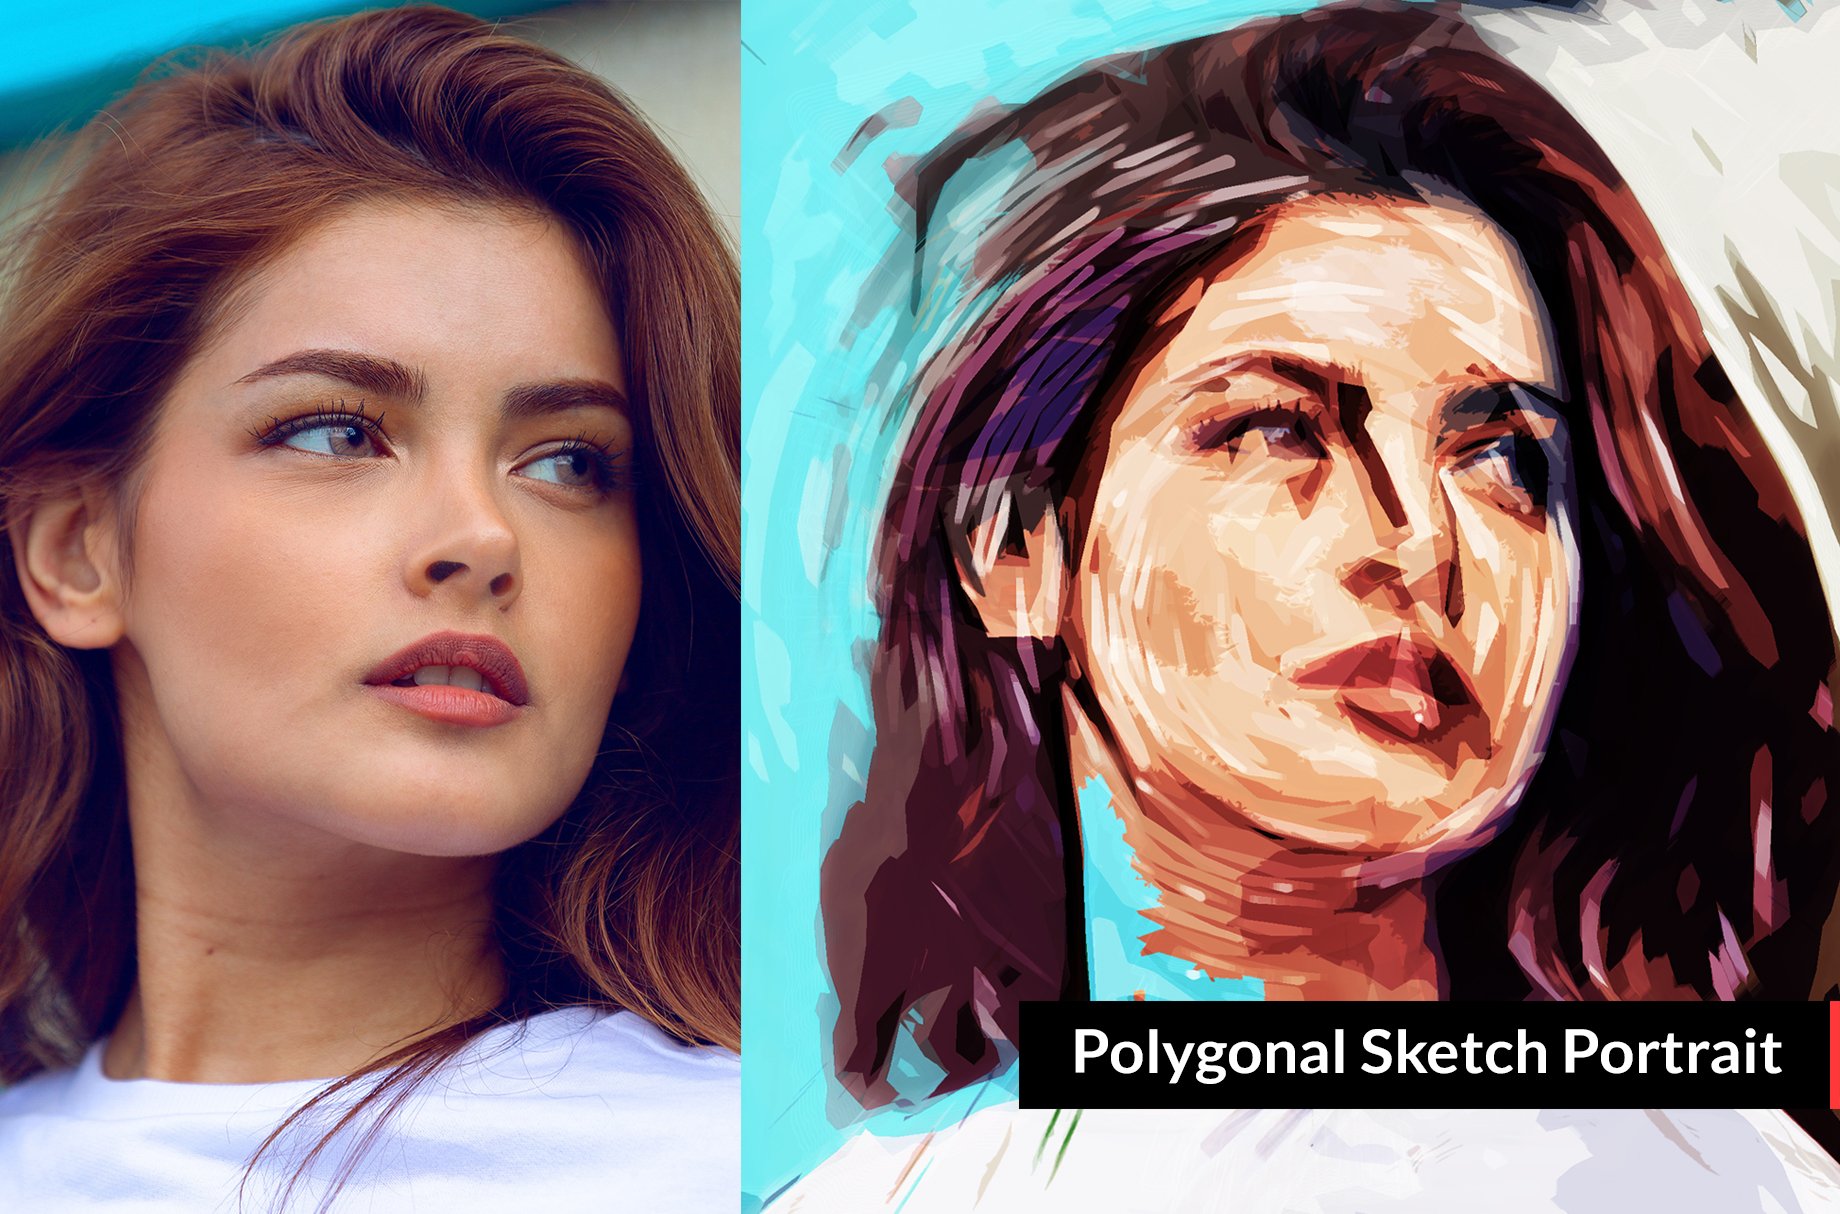 Polygonal Sketch Portraitpreview image.